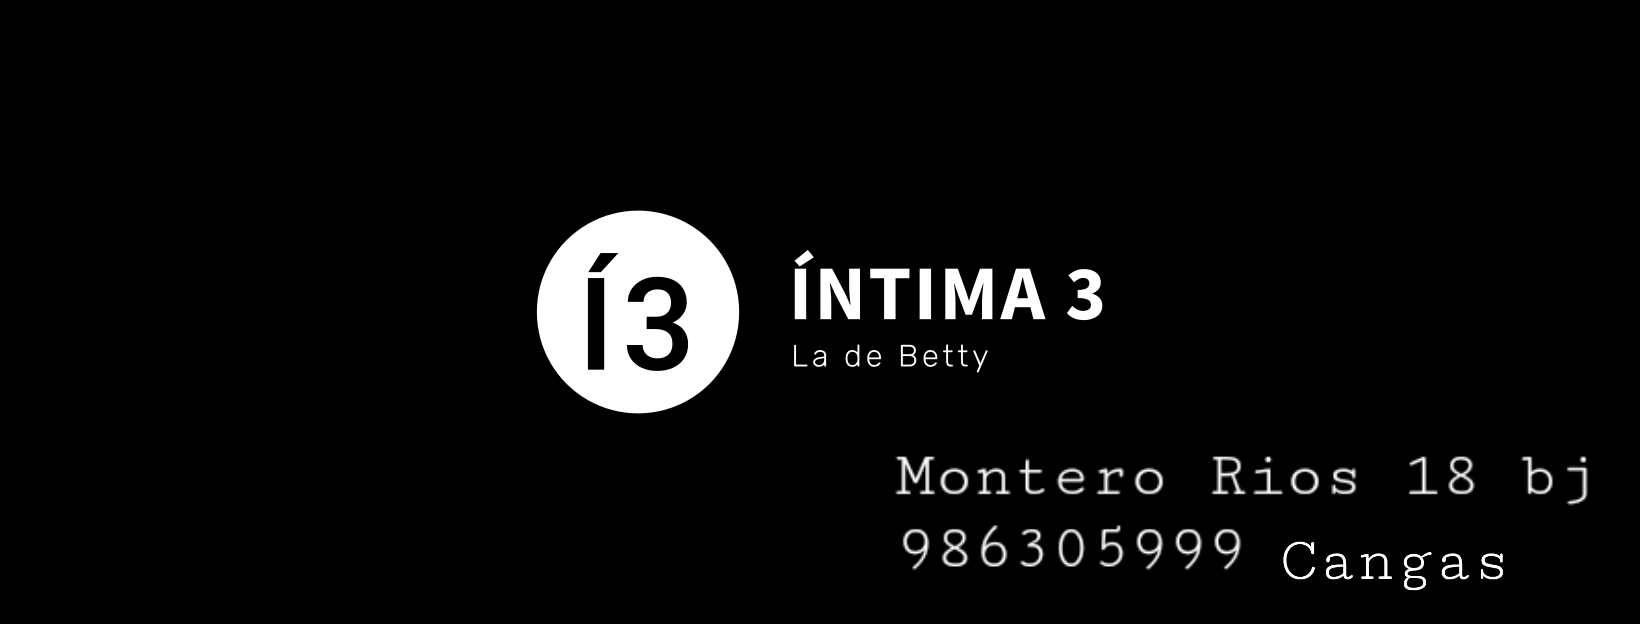 INTIMA 3